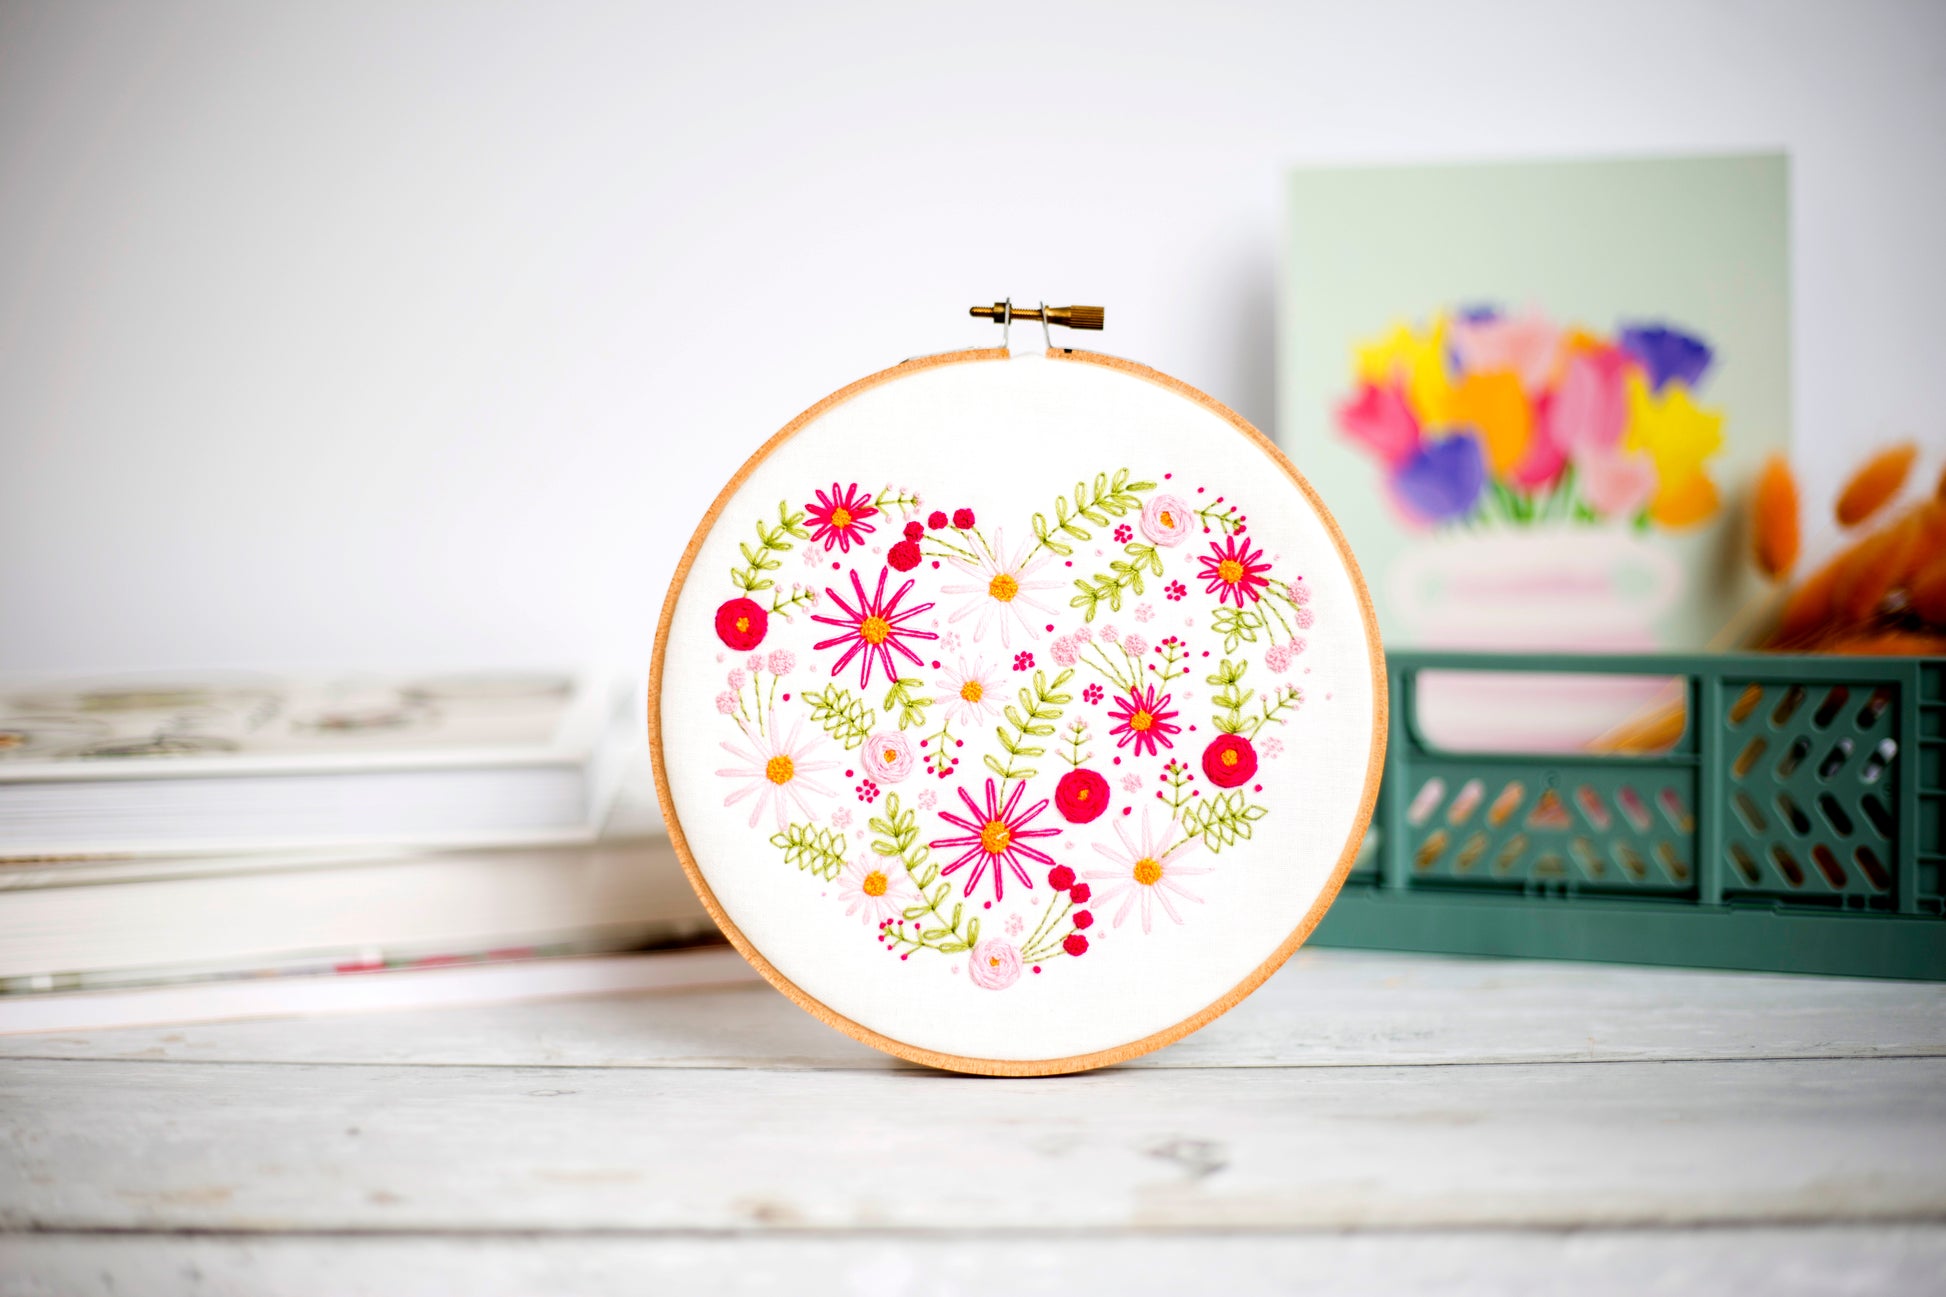 Free Daffodil Embroidery Pattern Download – ohsewbootiful